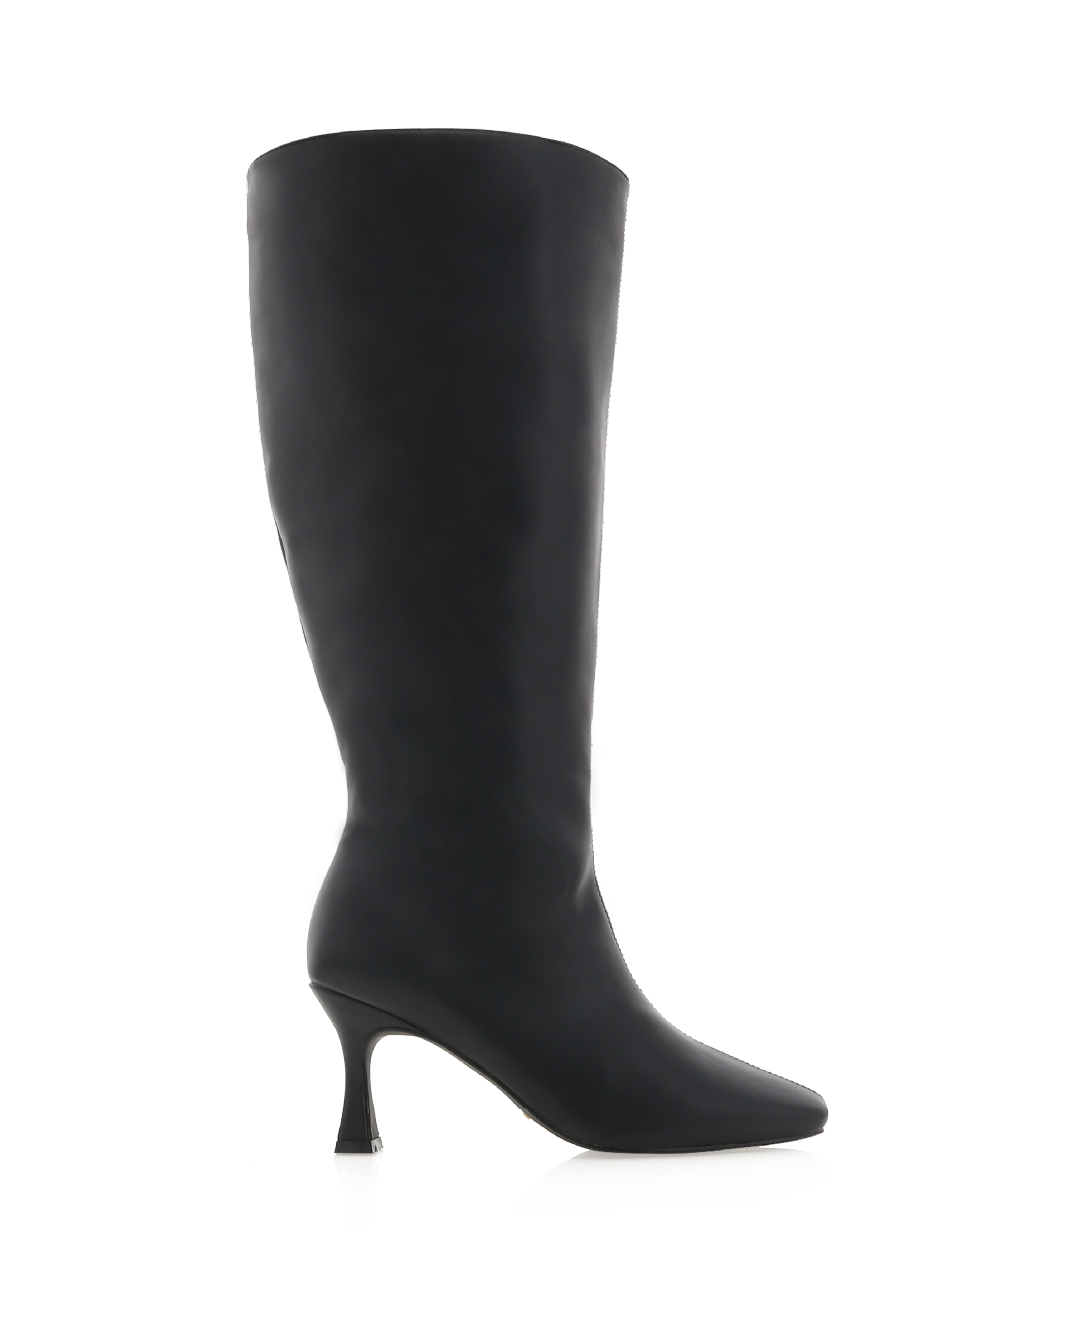 CORBIN CURVE - BLACK-Boots-Billini-BILLINI USA